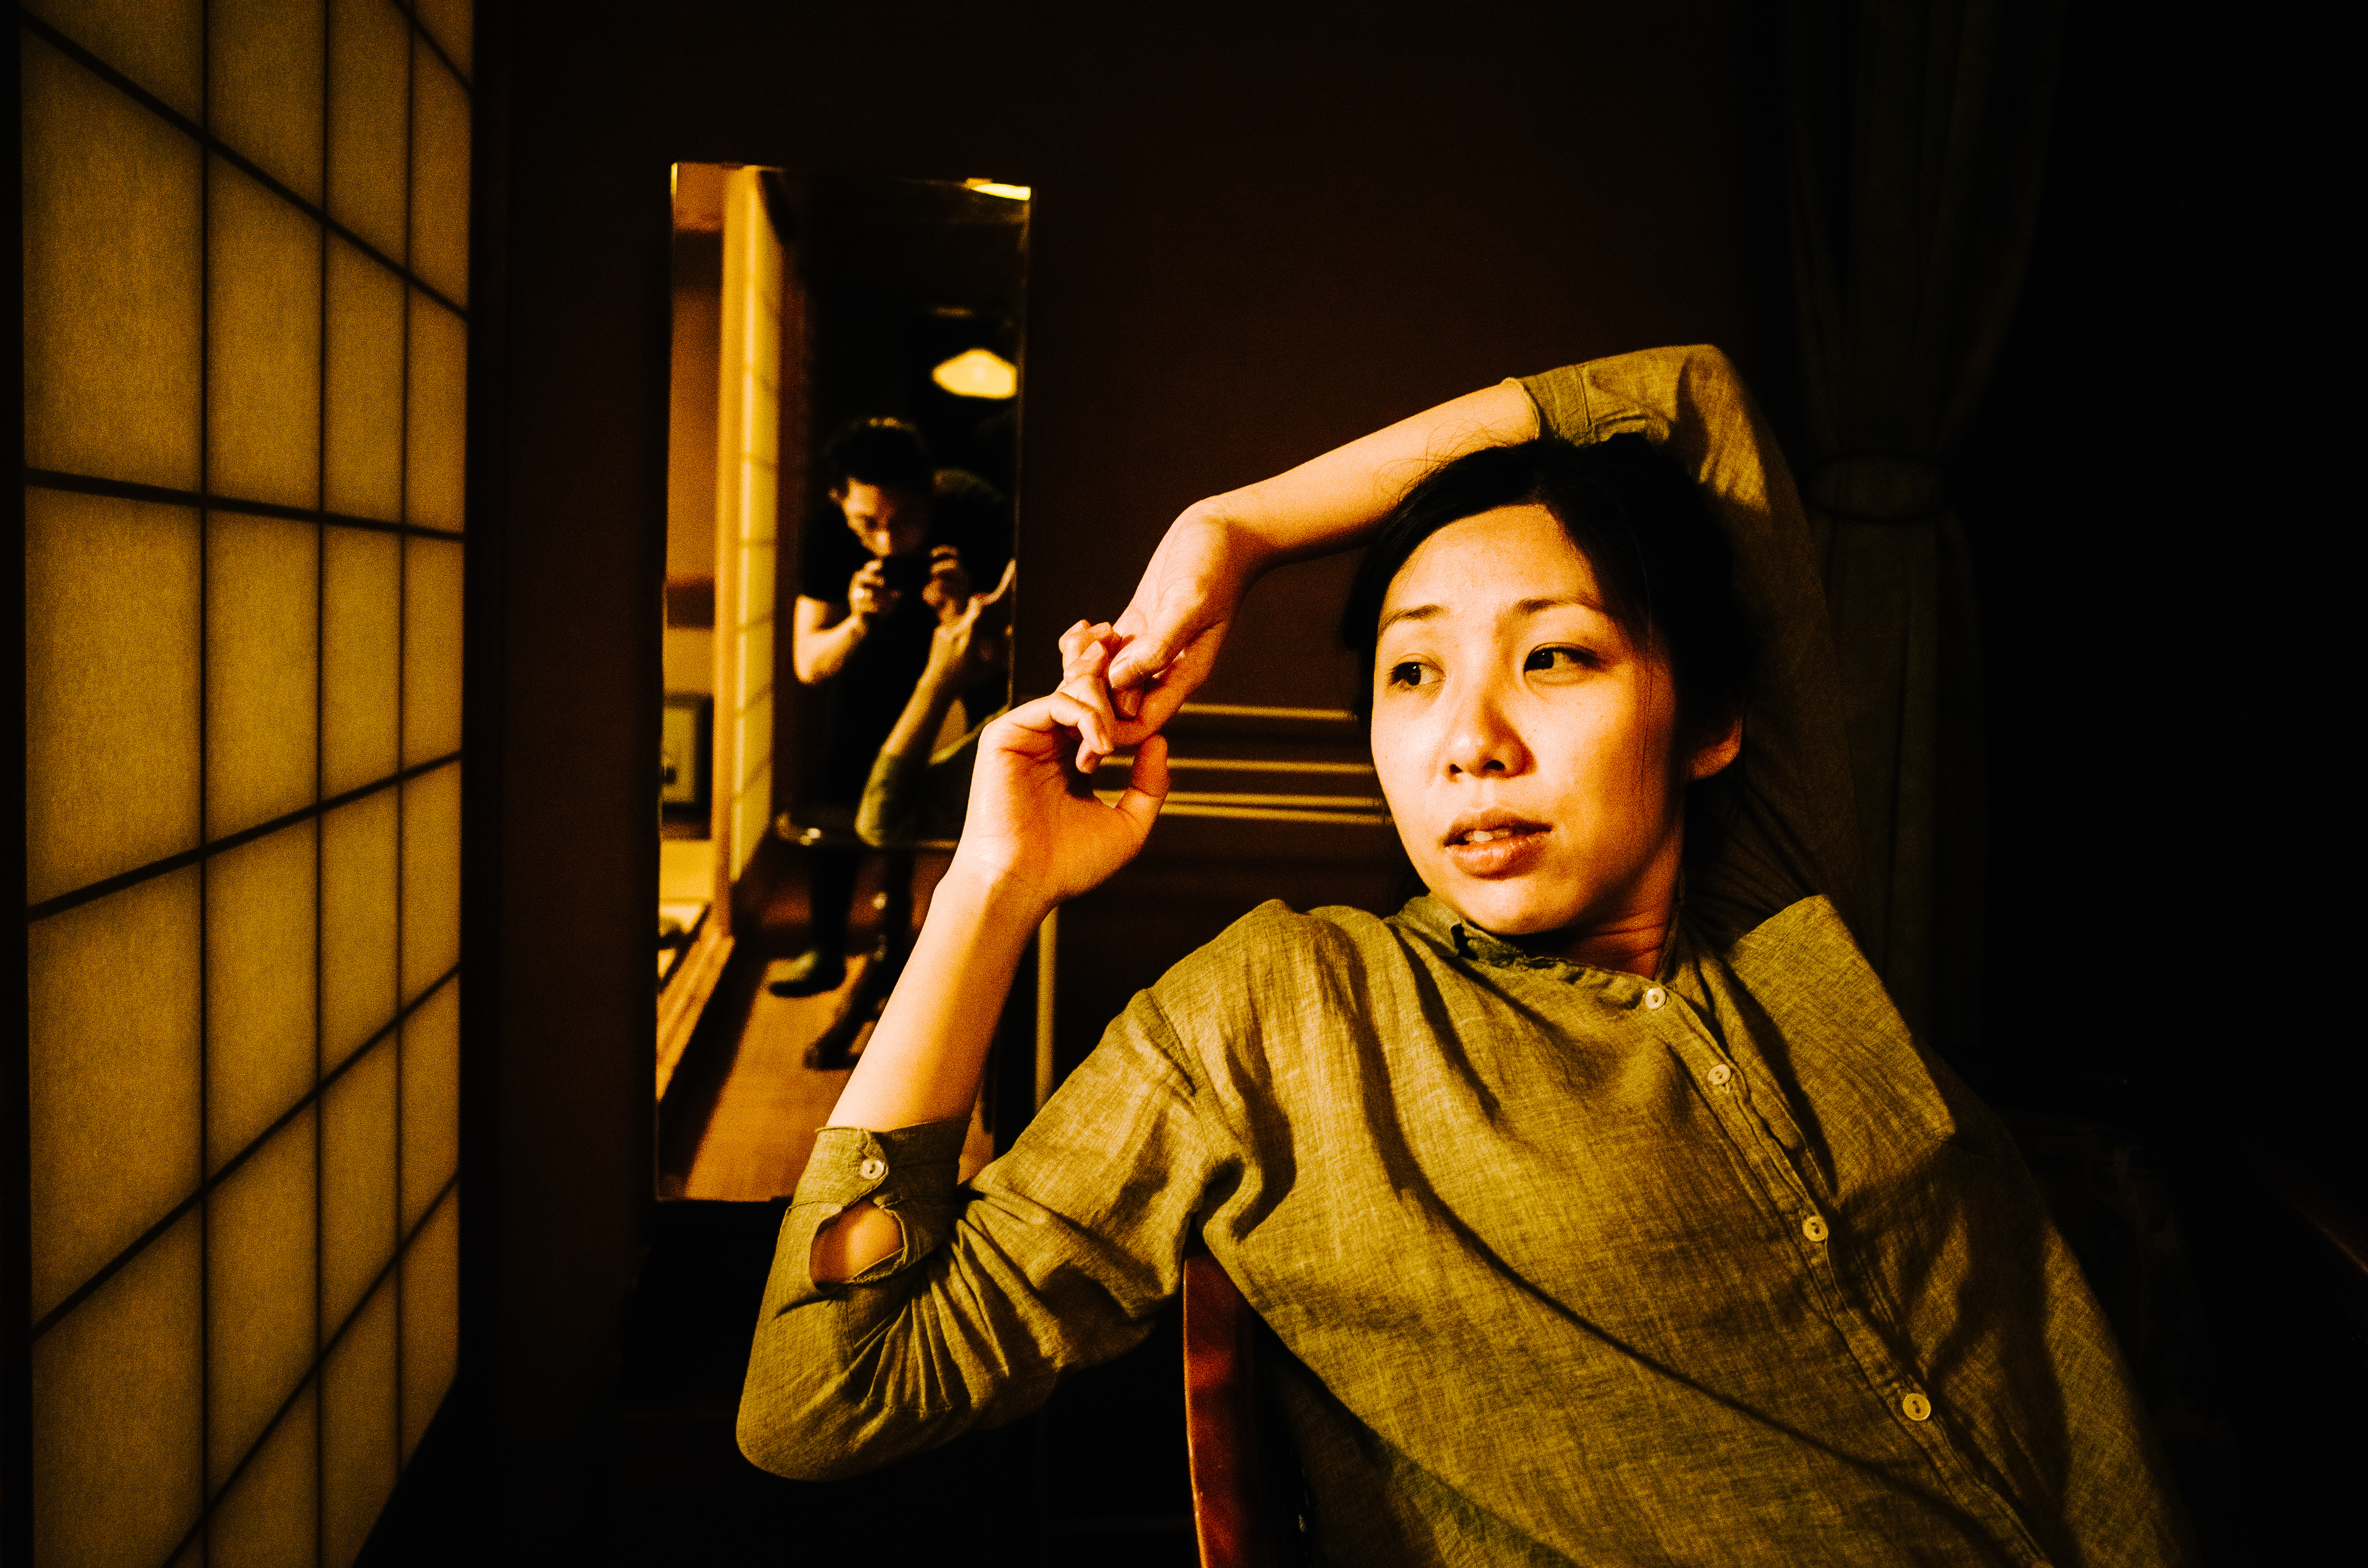 Cindy stretching and self portrait of ERIC in Uji Ryokan. 2017